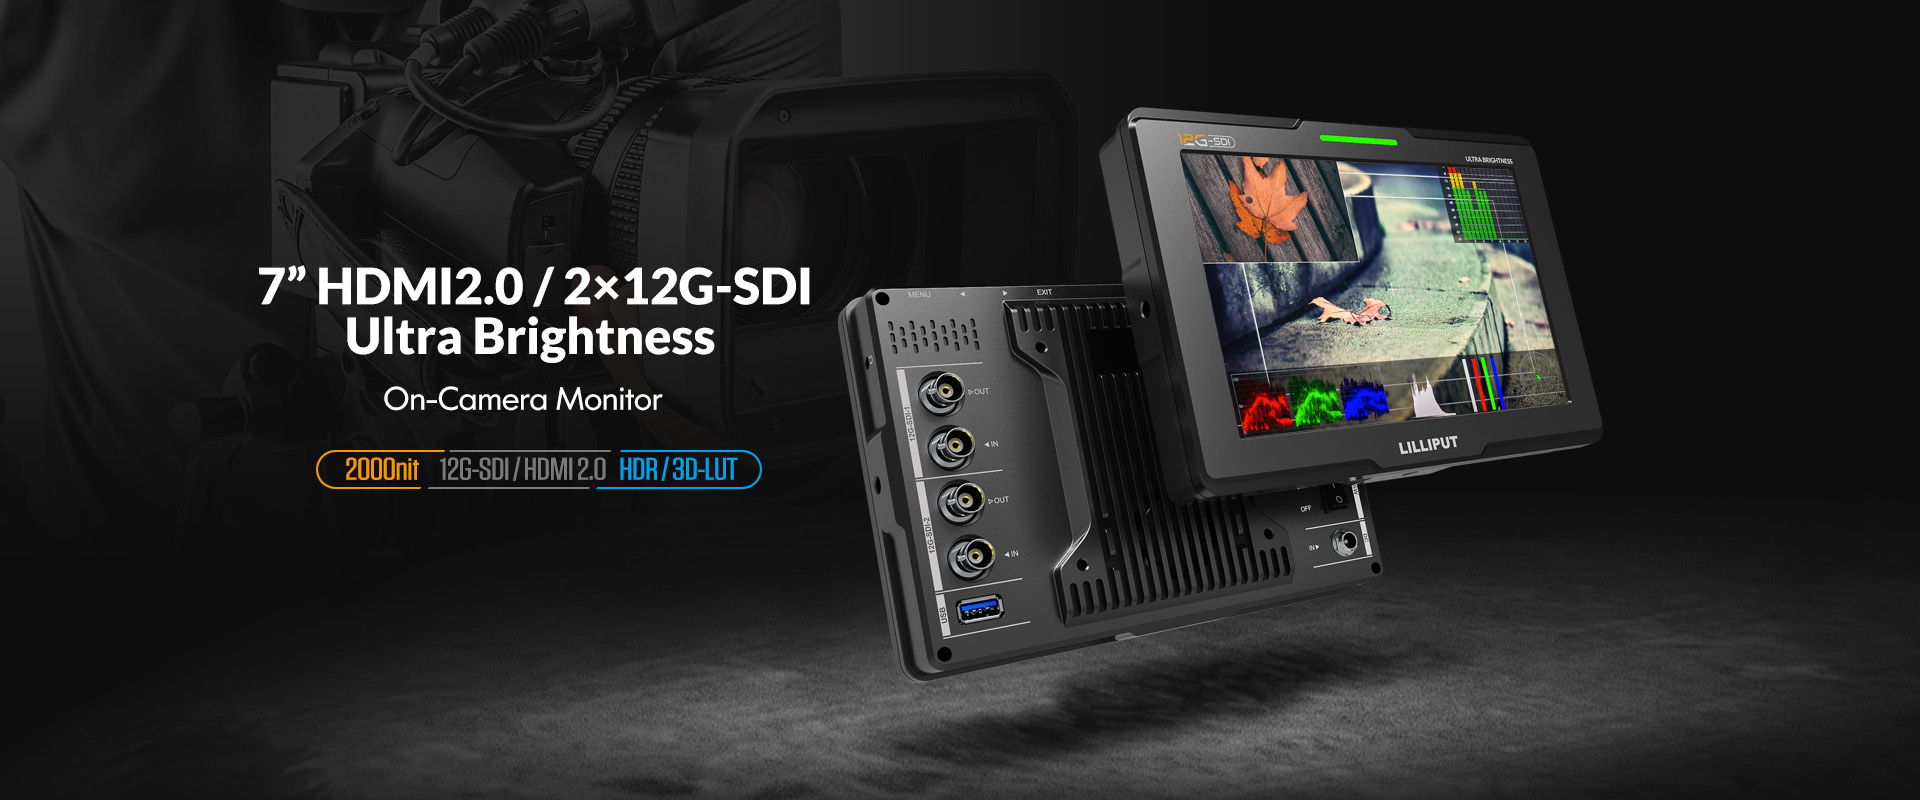 7 inch 12G-SDI top-kamera monitor